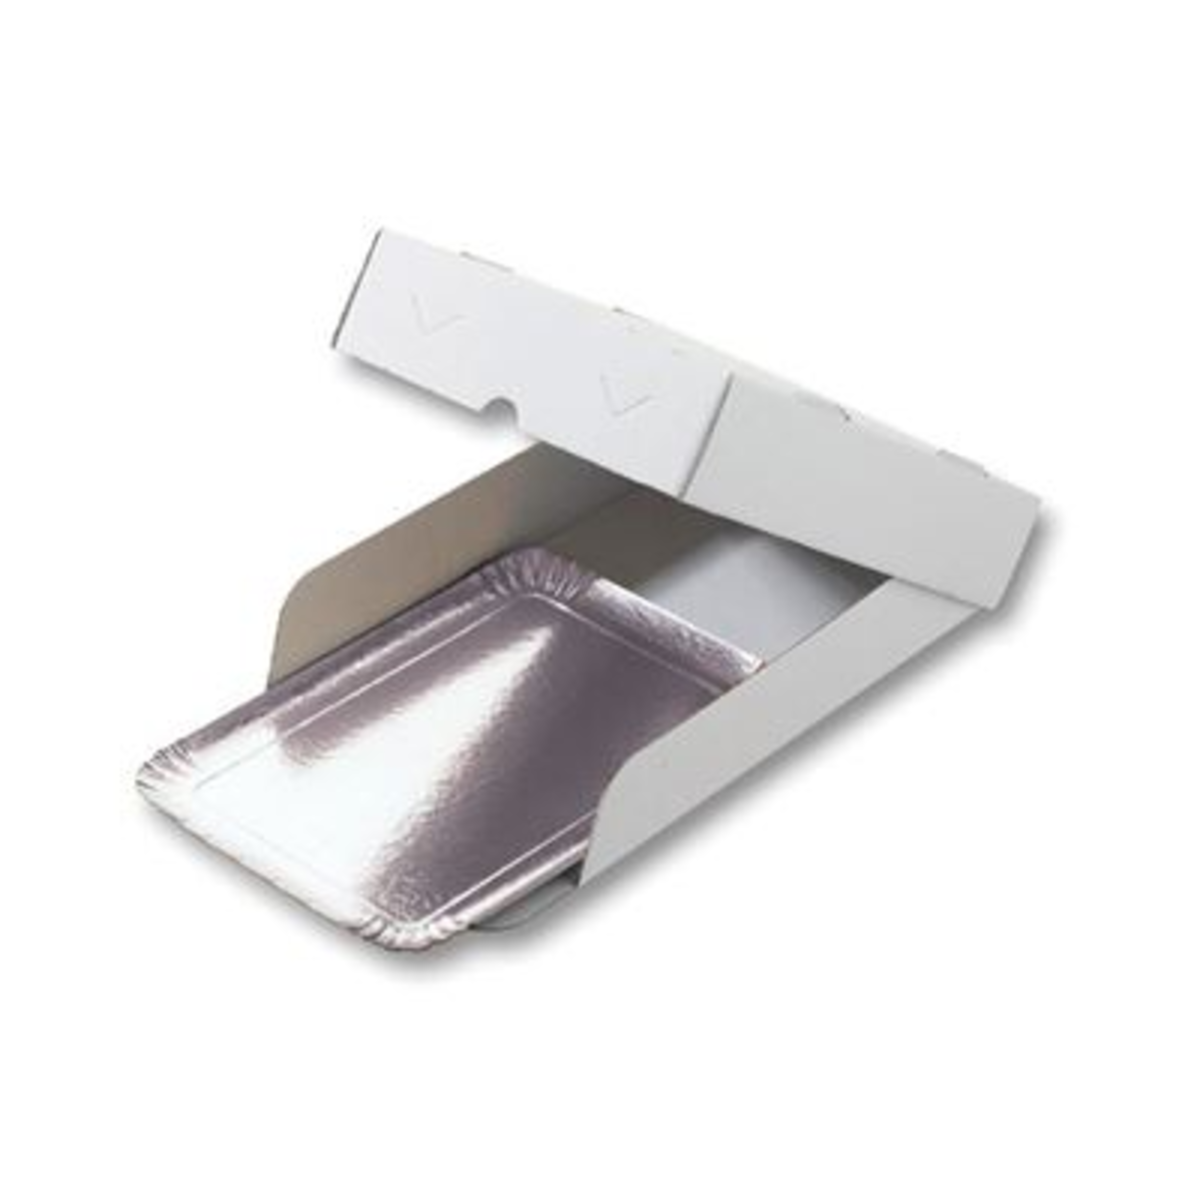 Boîte pour plateau traiteur carton blanc 19 x 28 cm x 100 Garcia de Pou - 229.88